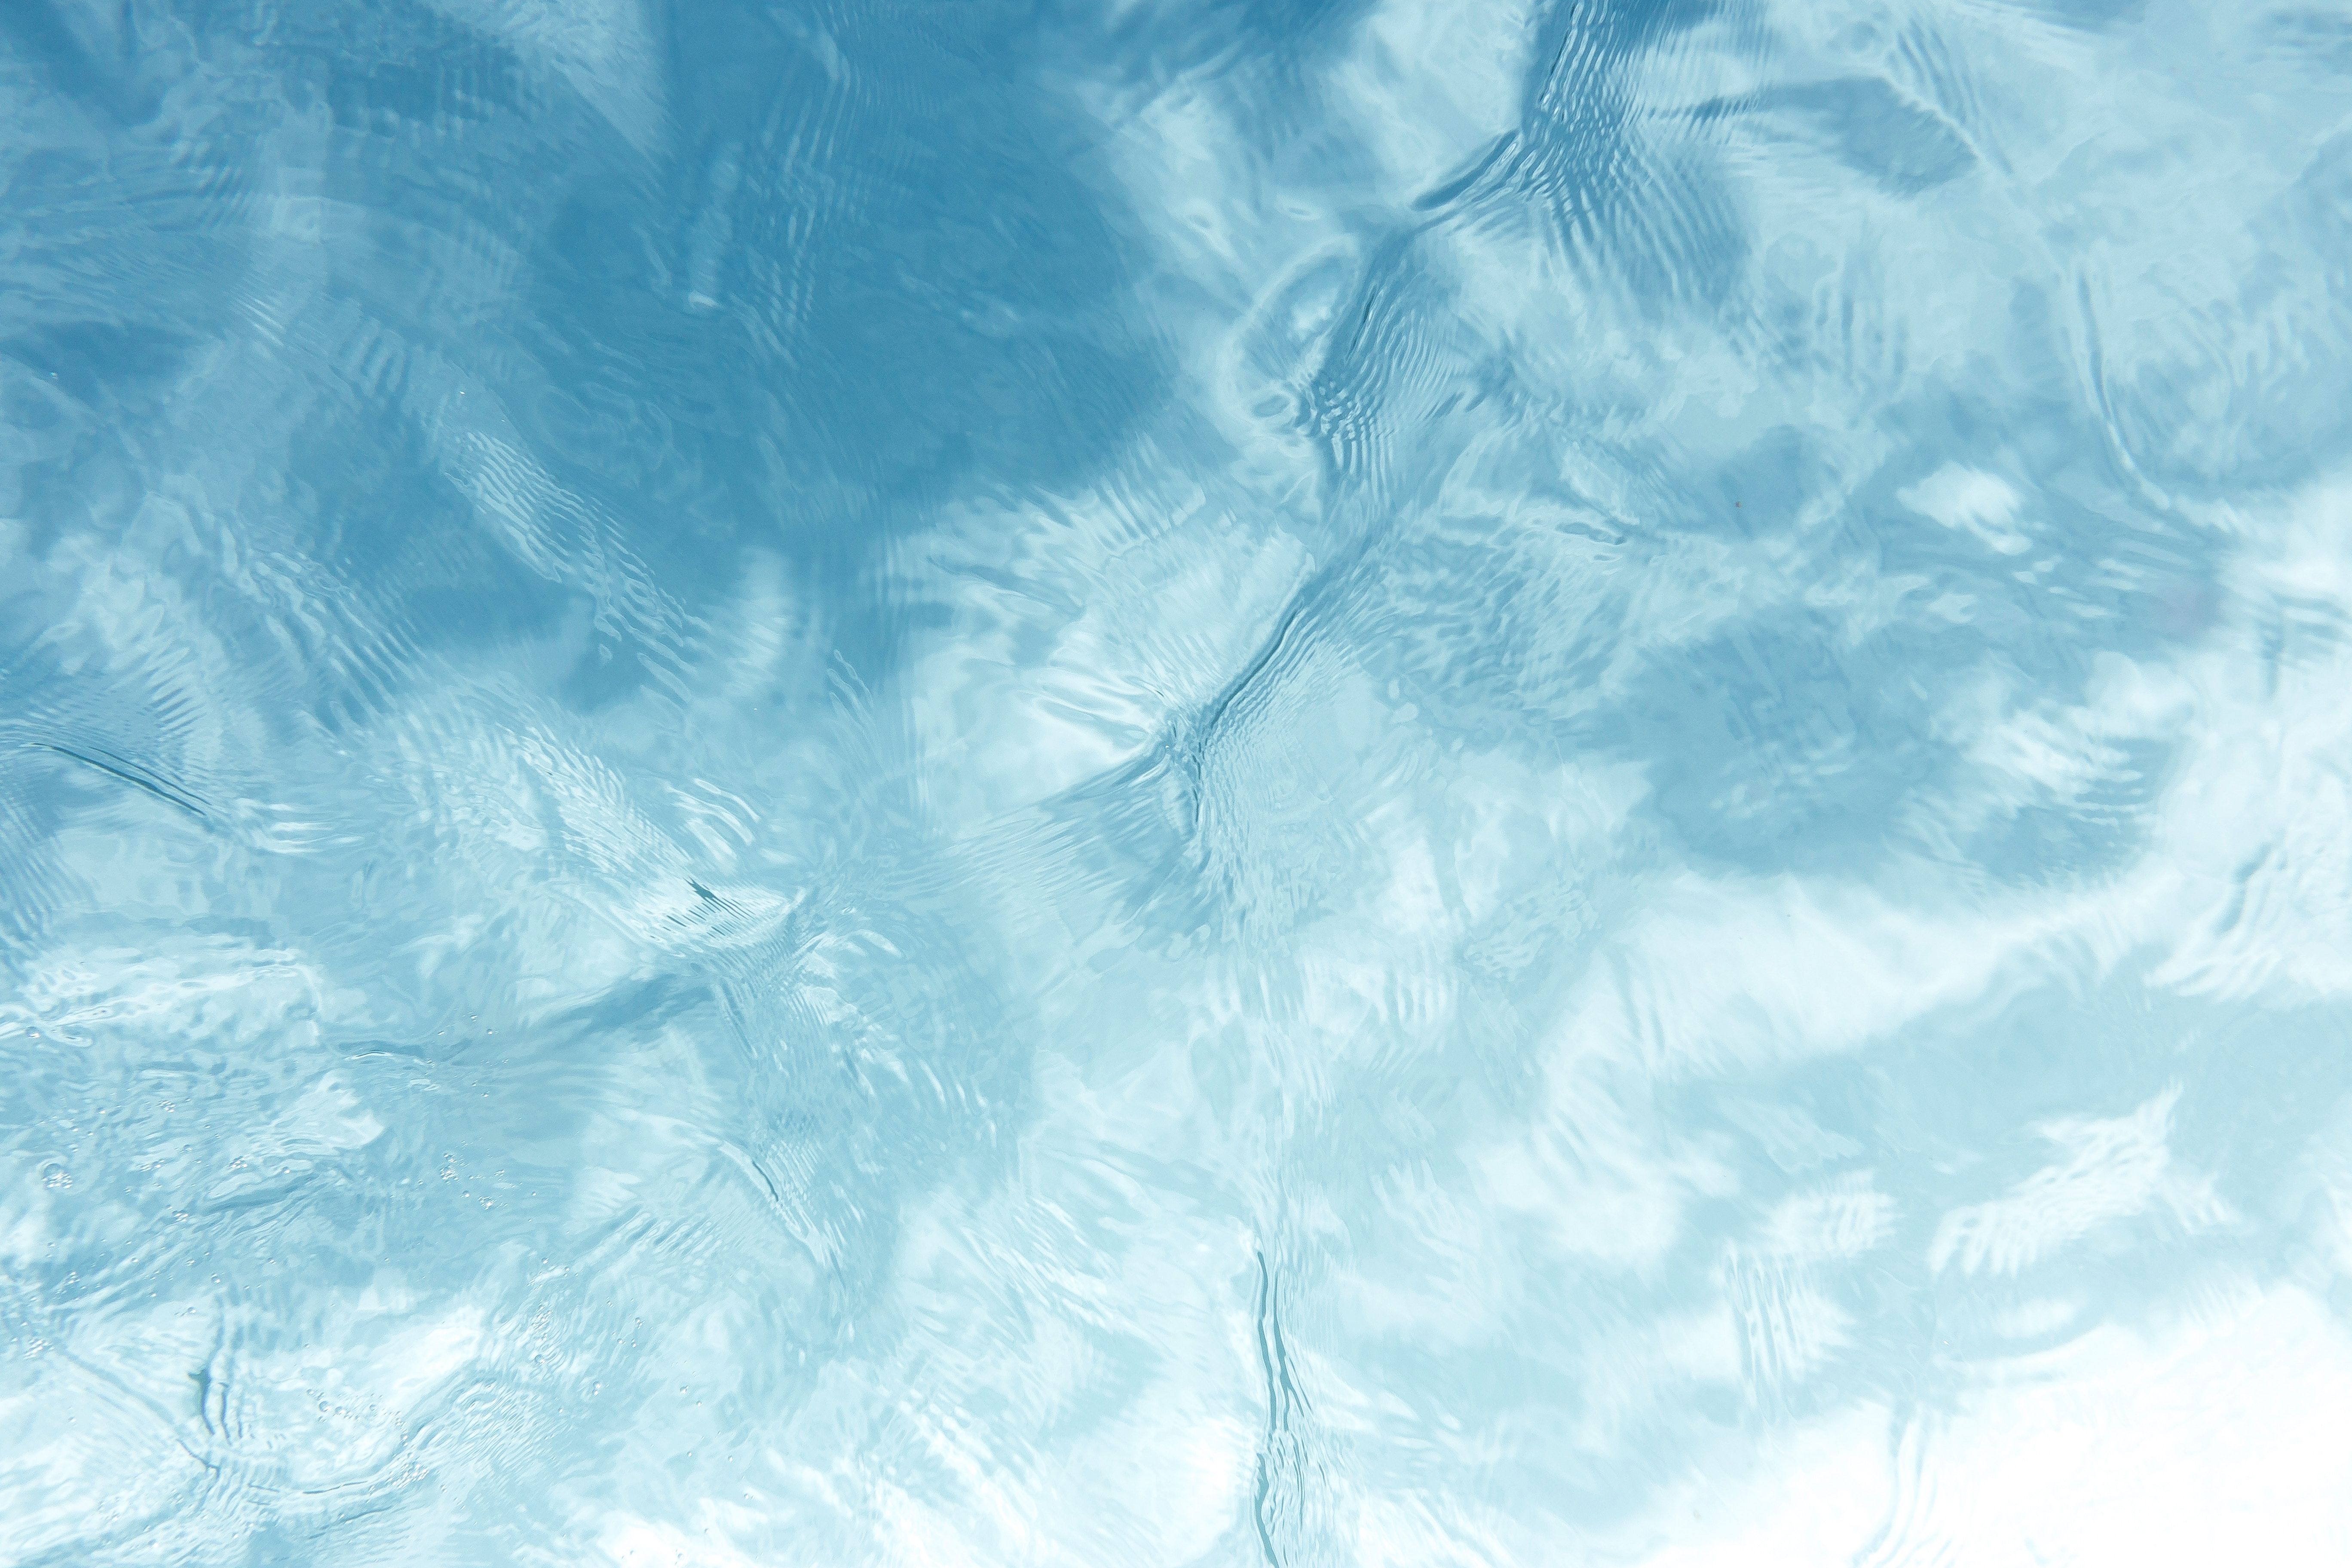 5472x3648 #desktop background, #samscrim, #sea, #desktop wallpaper, #amazing wallpaper, #Creative Commons image, #abstract, #desktop background, #background, #surf, #water, #summer wallpaper, #canon, #texture, #ocean, #blue, #aquatech